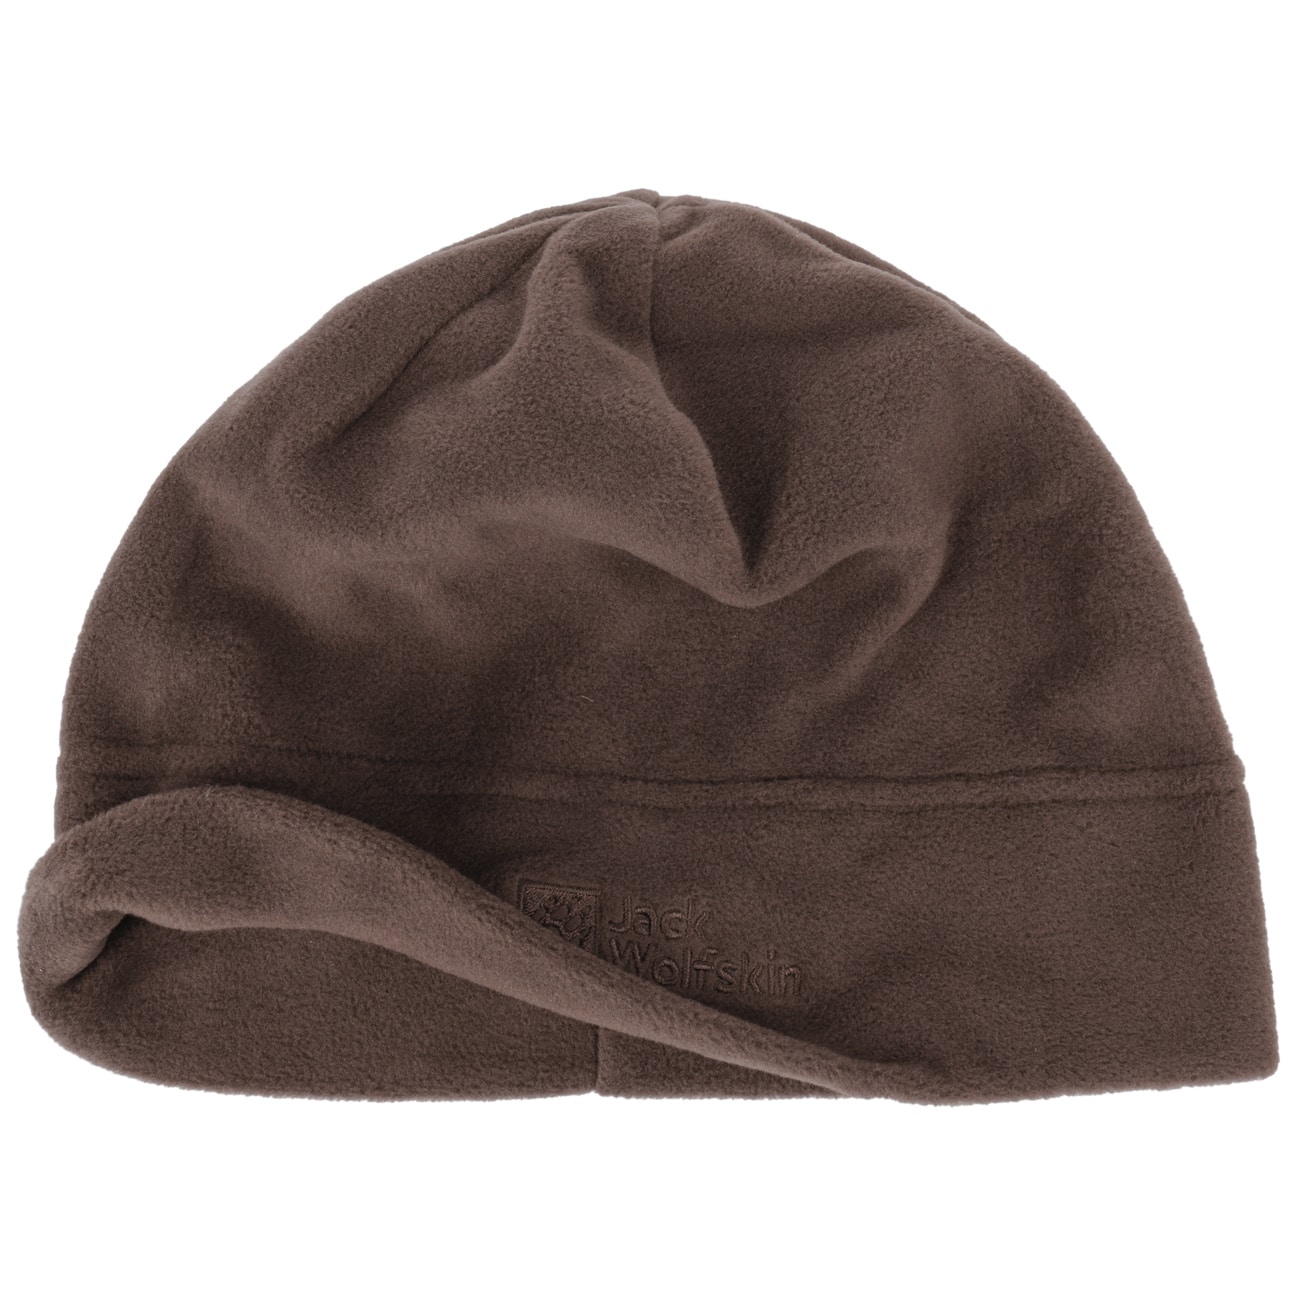 & online Hatshopping ▷ Hat Jack Stuff --> Shop Real by Beanie Hats, Wolfskin Caps Beanies